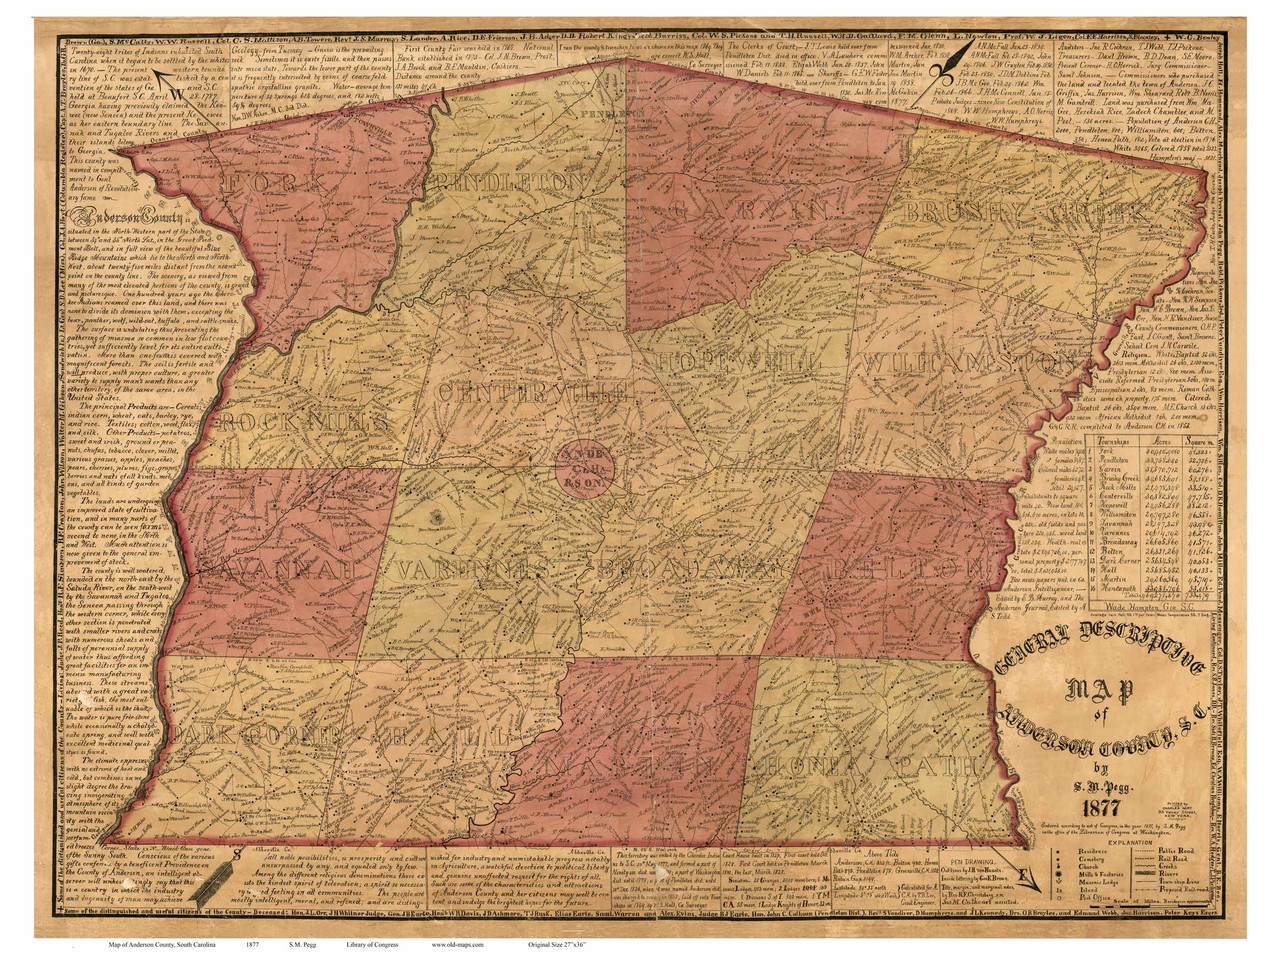 Anderson County 1877 South Carolina - Old Map Reprint